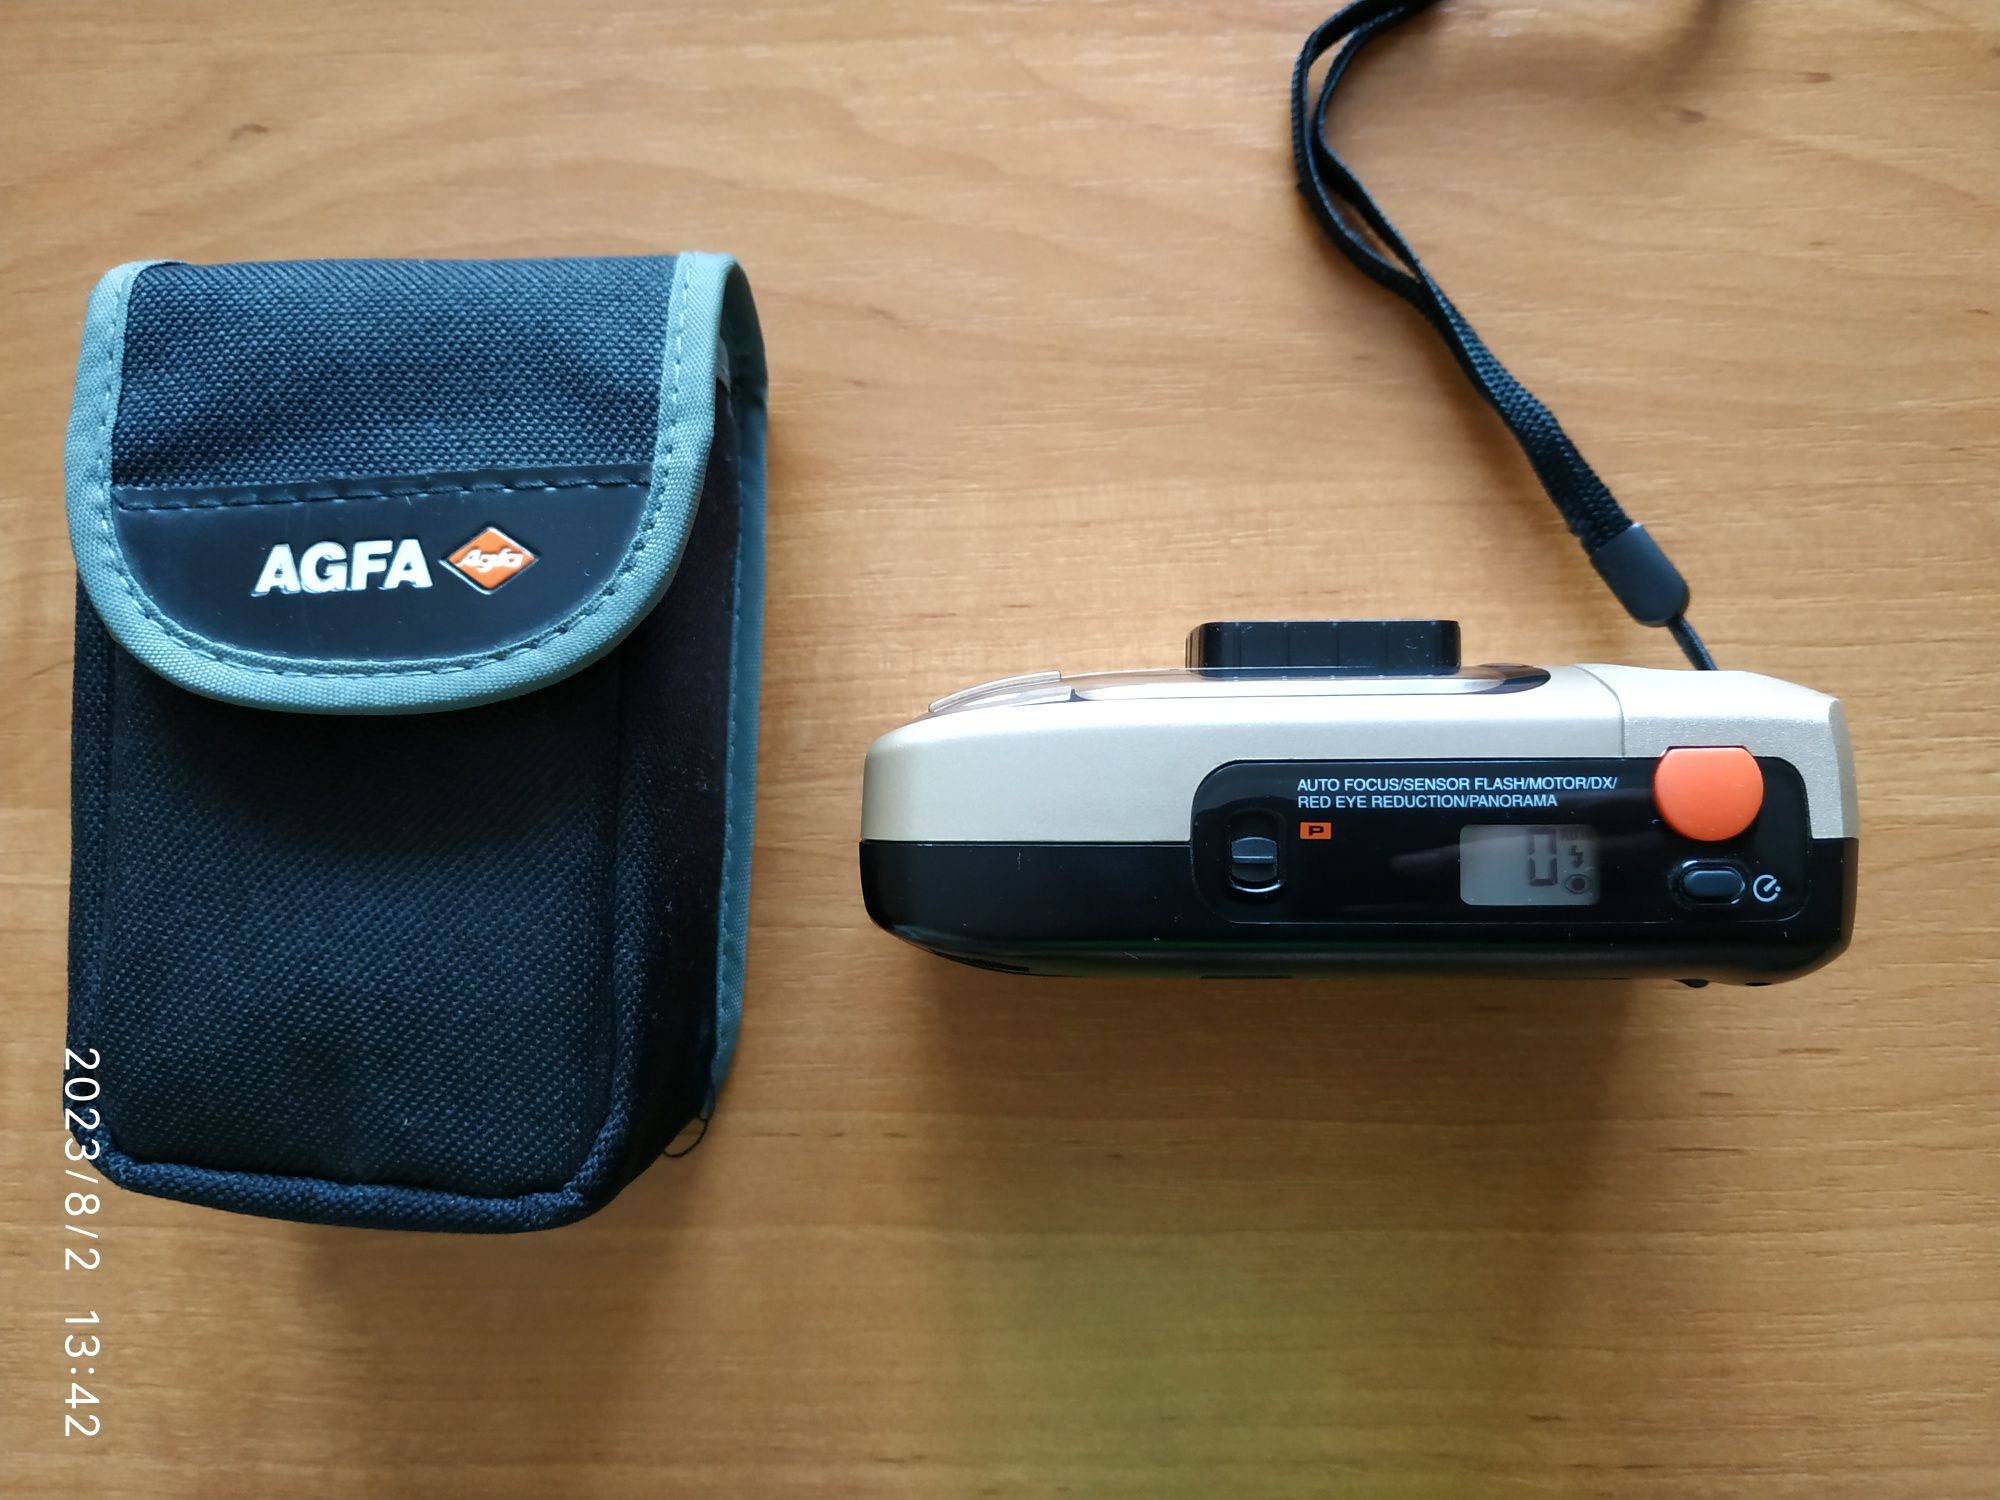 Aparat analogowy kompakt - Agfa Live AF. Unikat